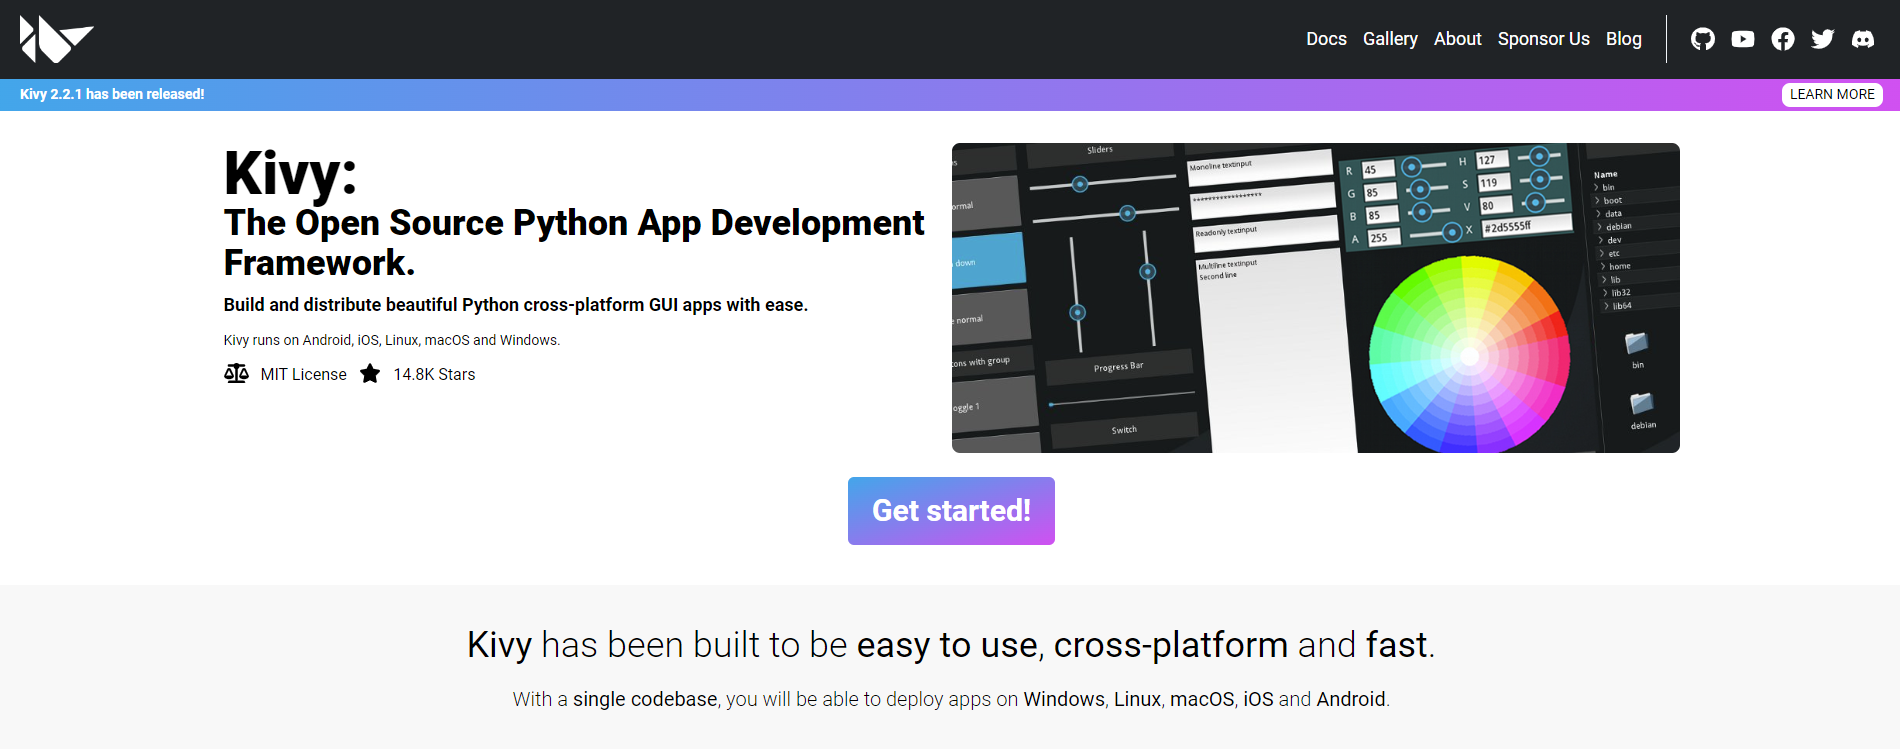 Top Python Tools for App Development: Kivy